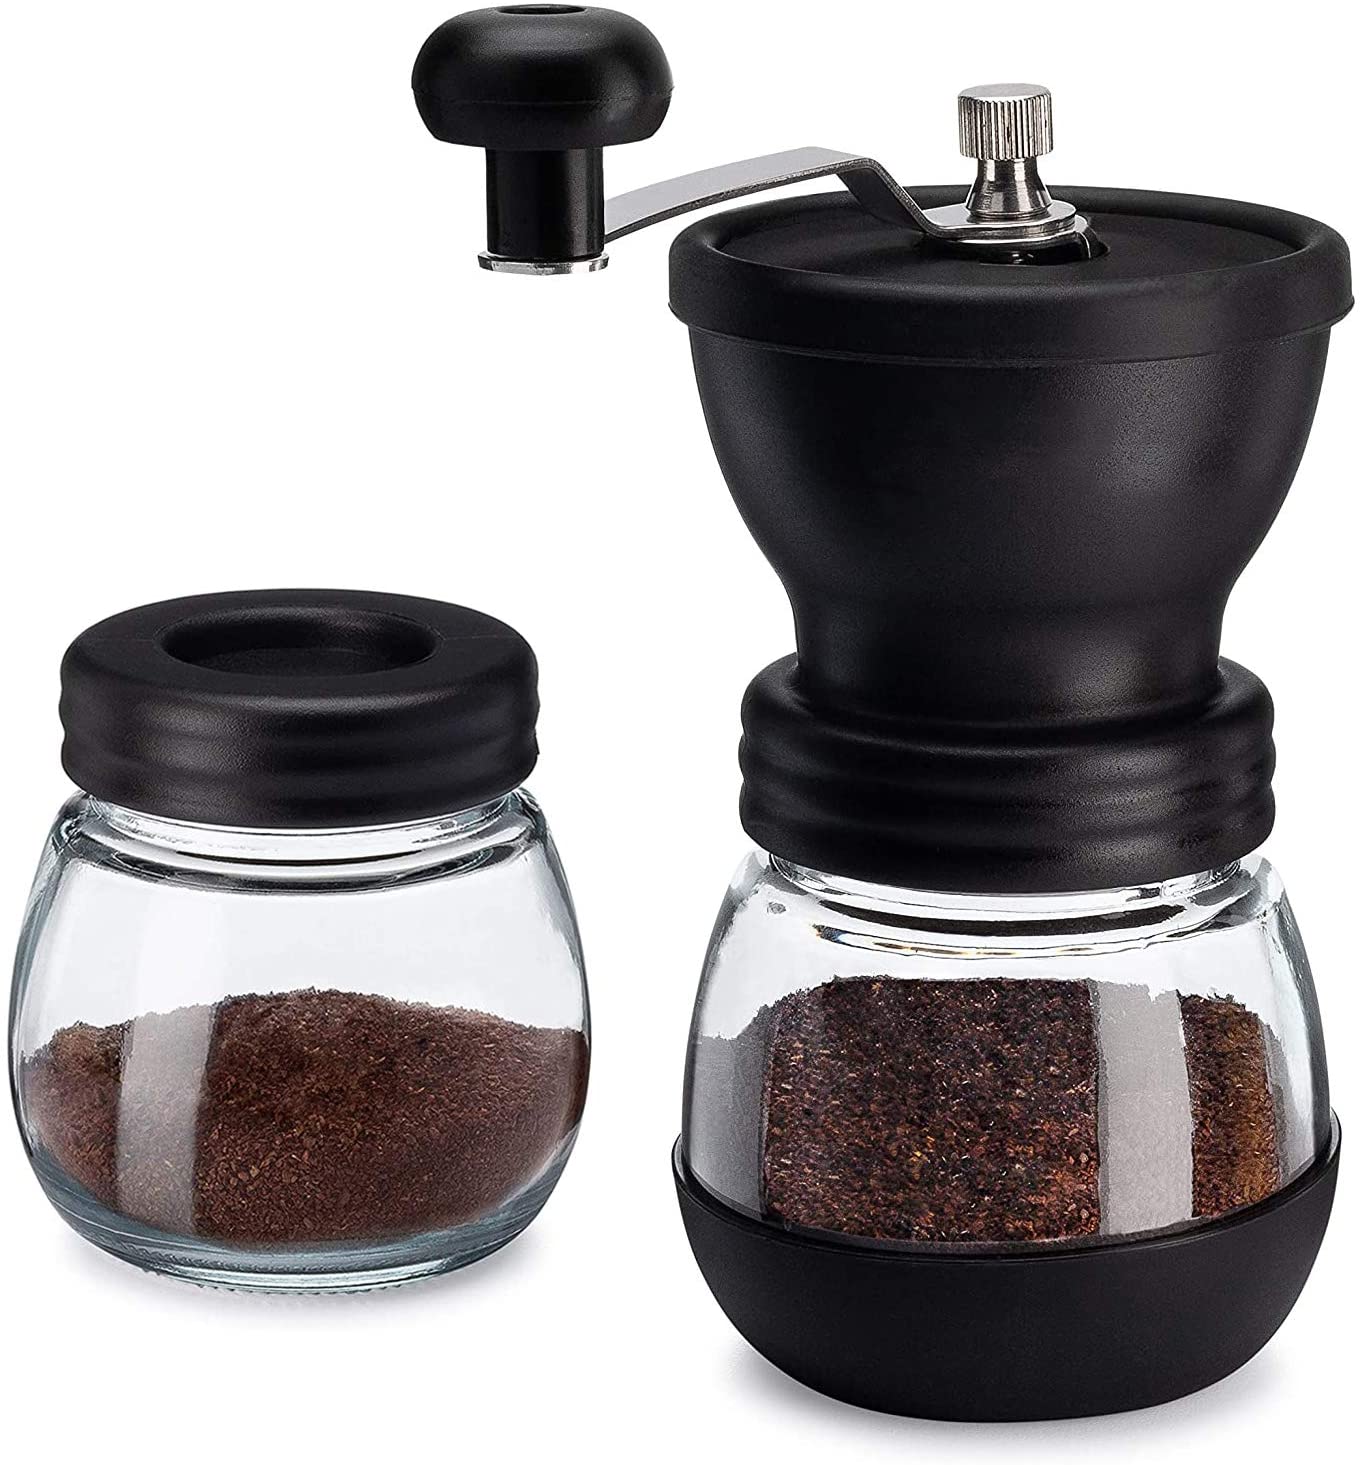 Manual Coffee Bean Grinder - 2 Glass Jars 11oz each